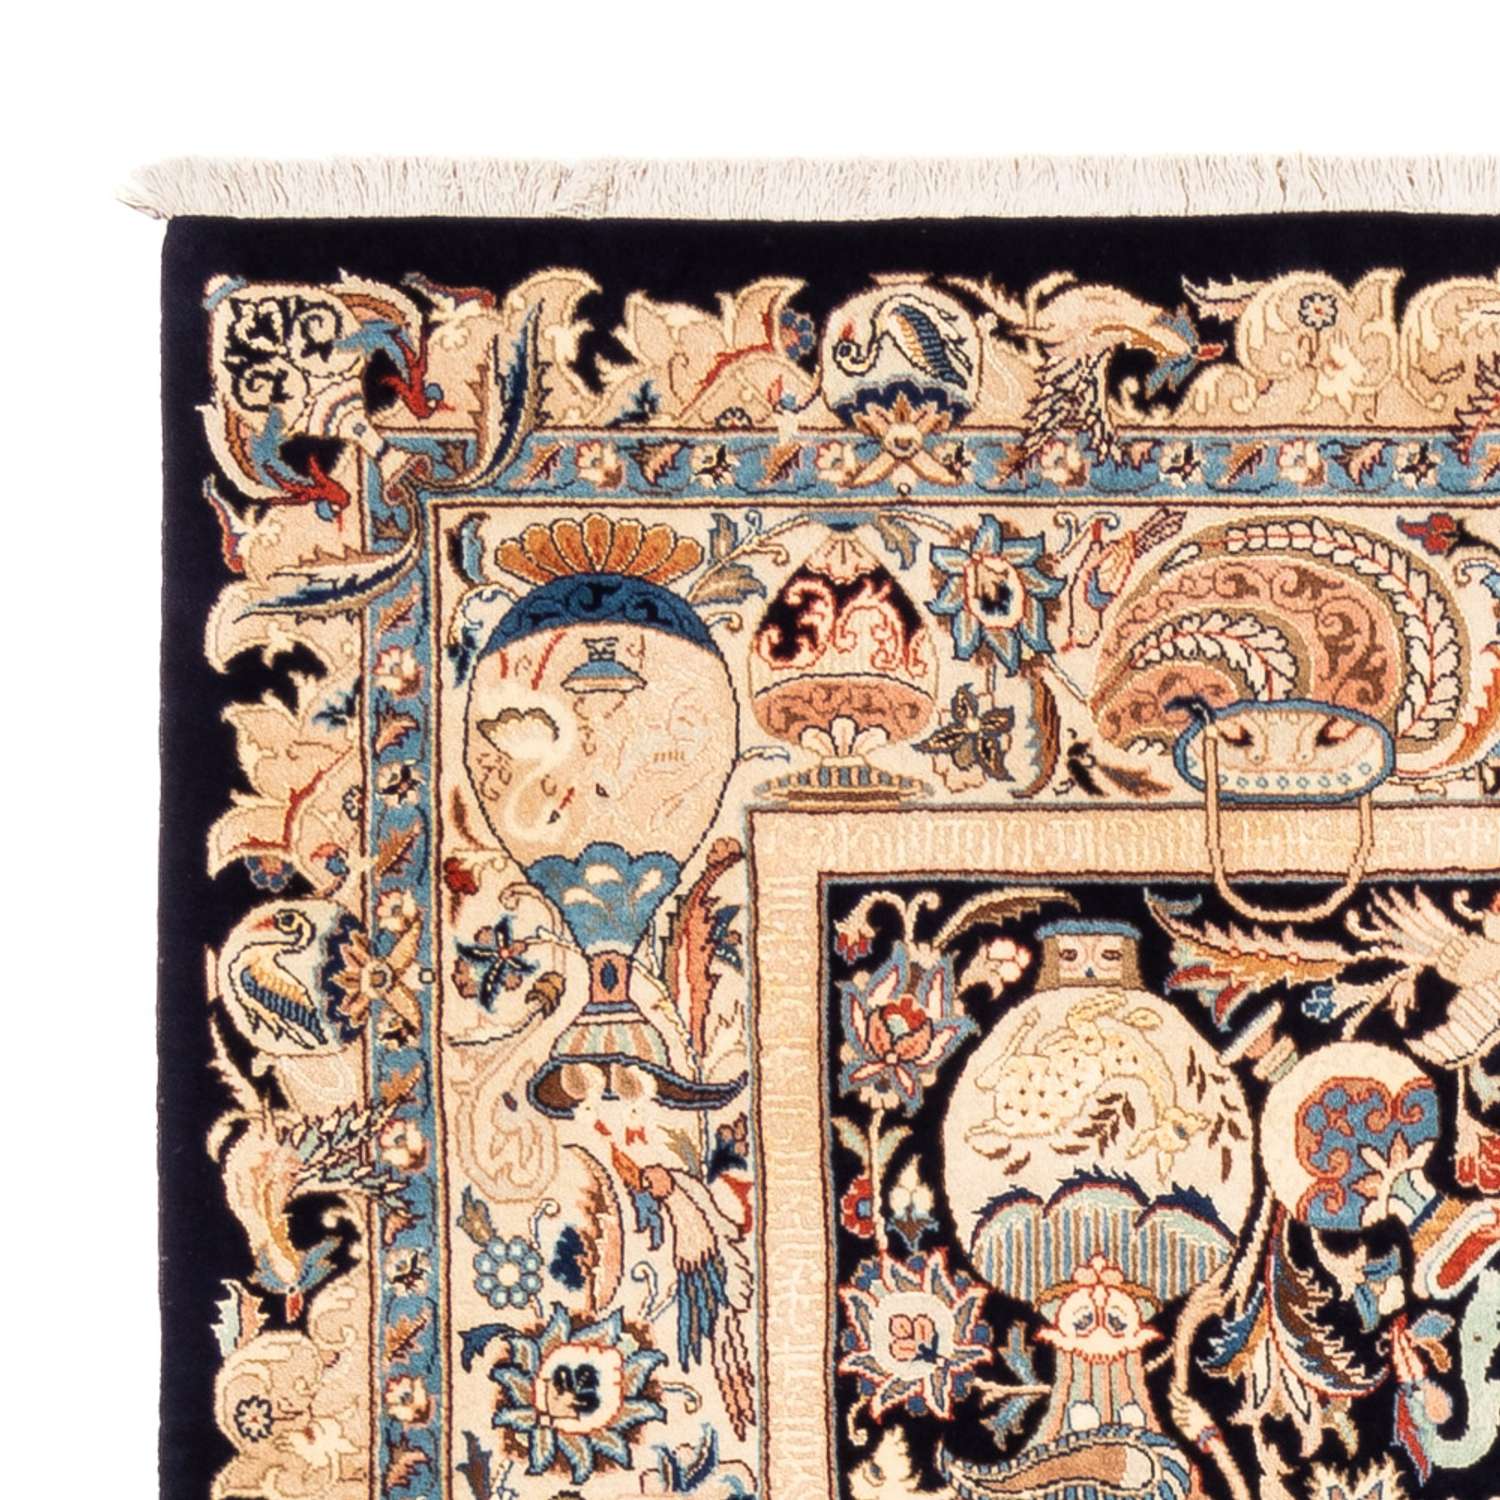 Persisk matta - Classic - 244 x 195 cm - grädde